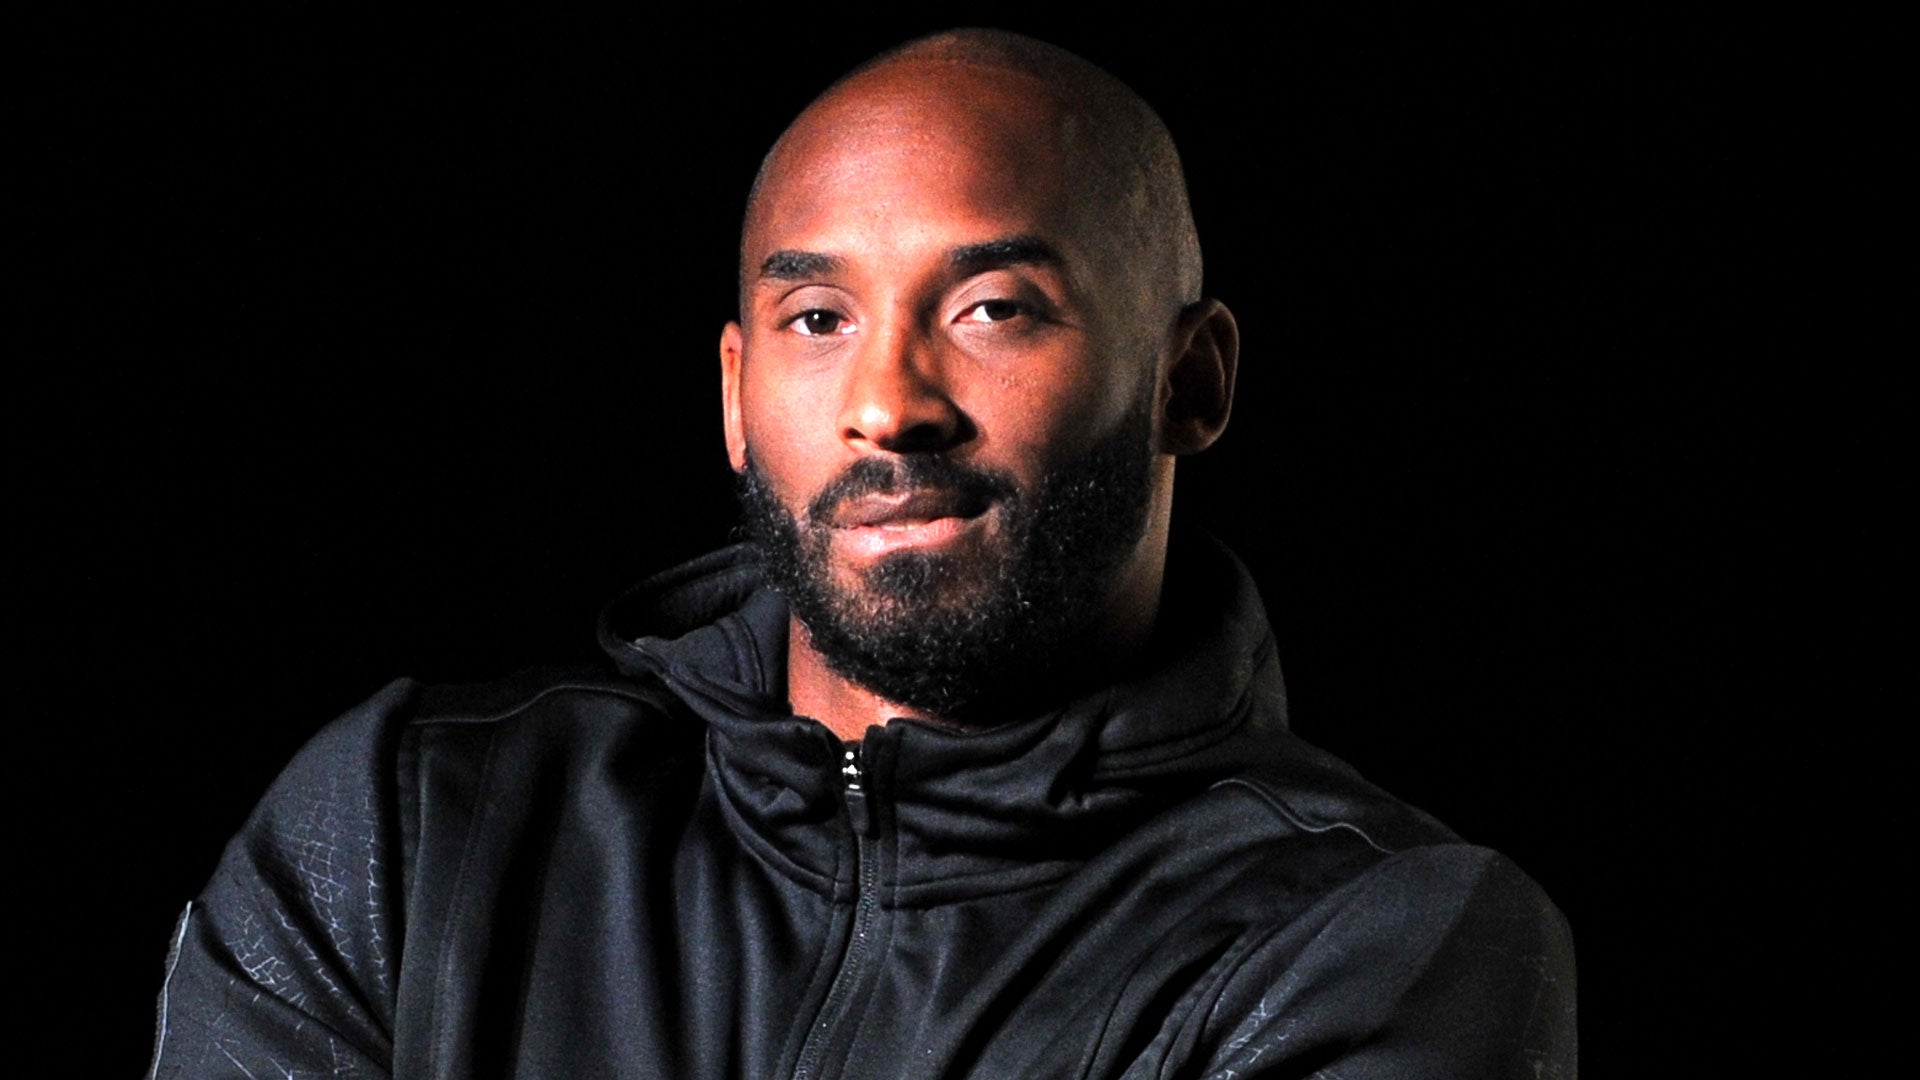 Derek Jeter focuses on Kobe Bryant's life off the court in remembrance